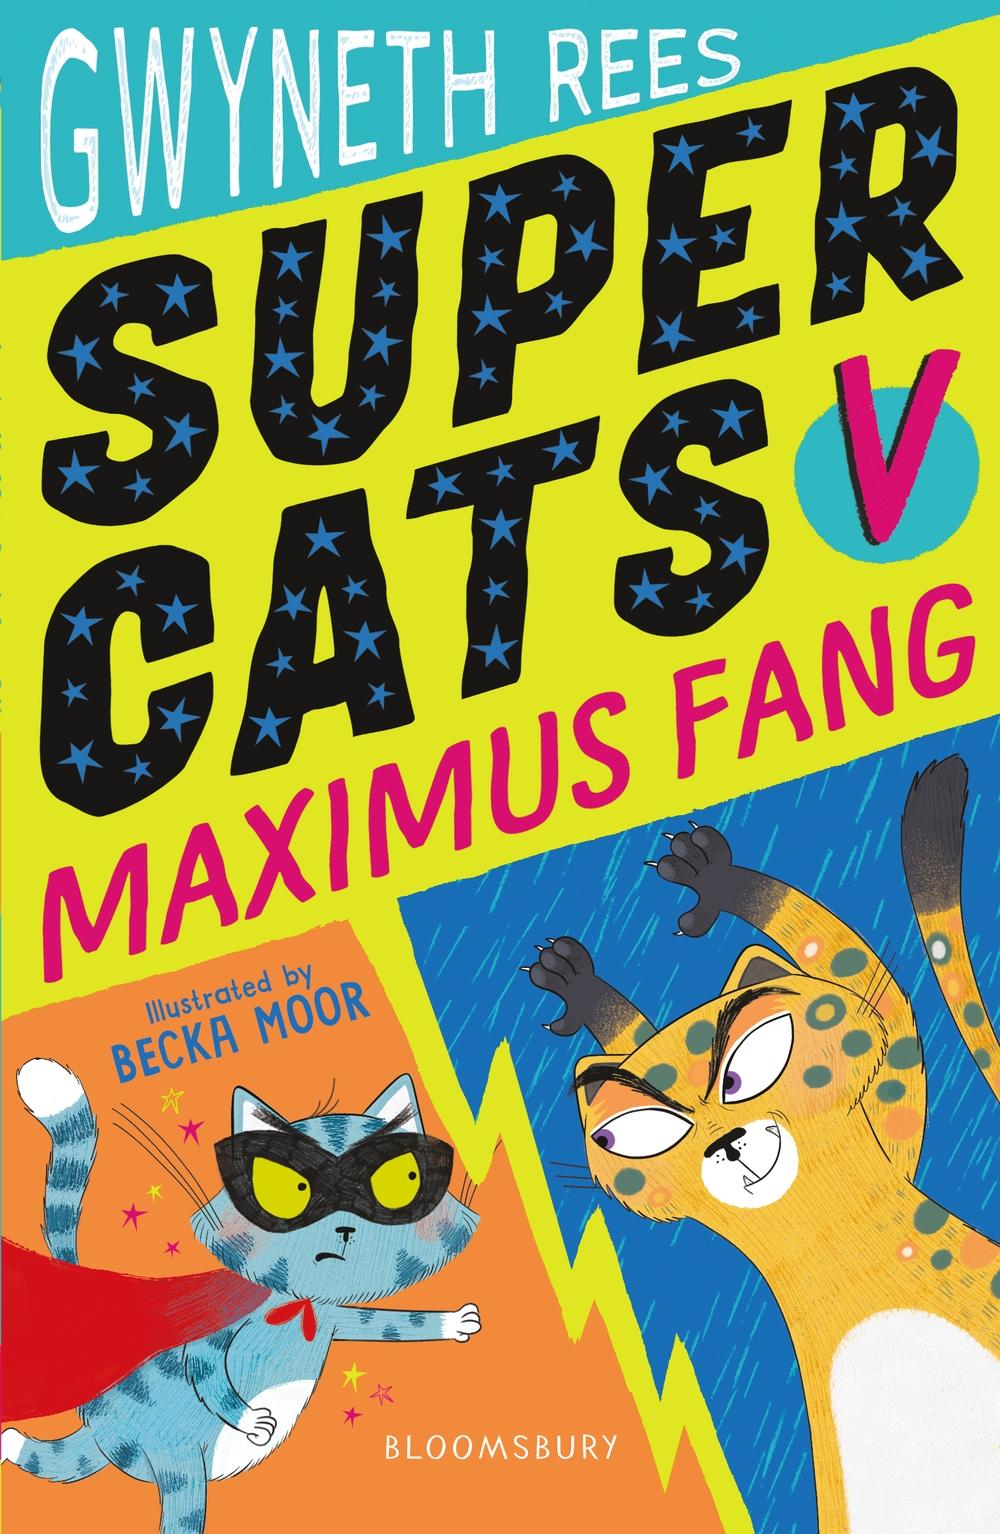 Super Cats v Maximus Fang - Gwyneth Rees